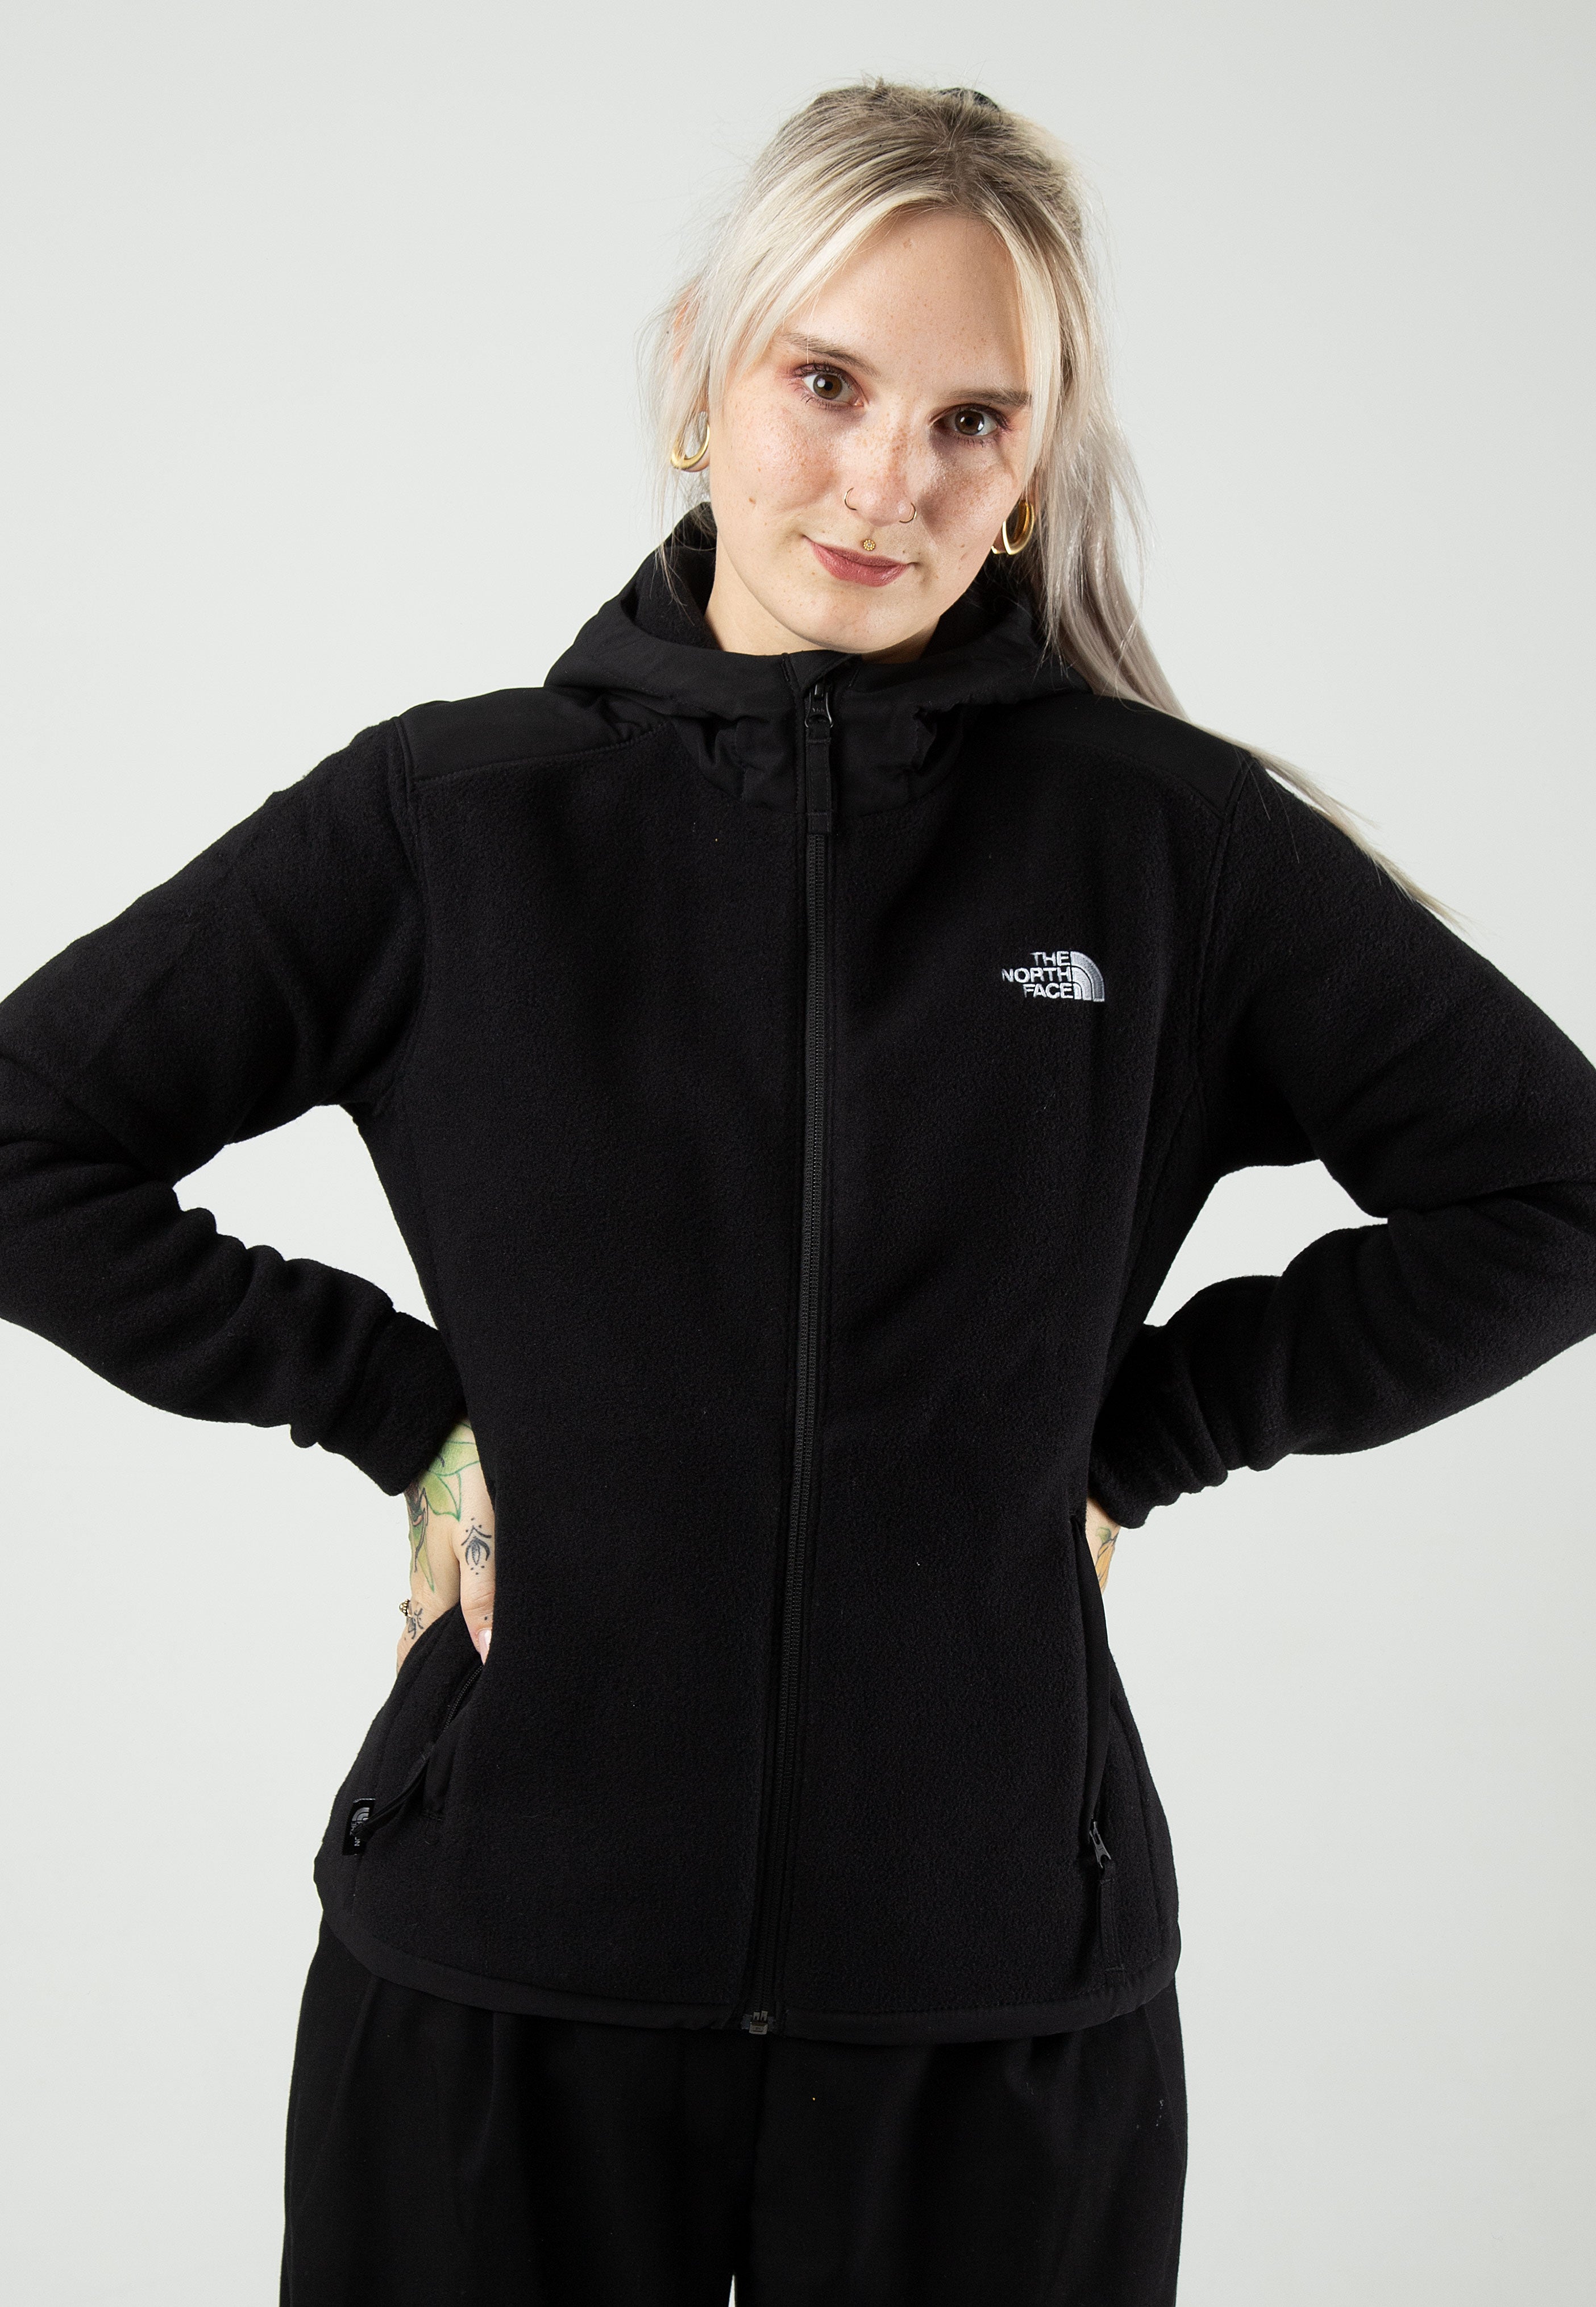 The North Face - Women’s Alpine Polartec 200 Hooded Tnf Black - Jacket